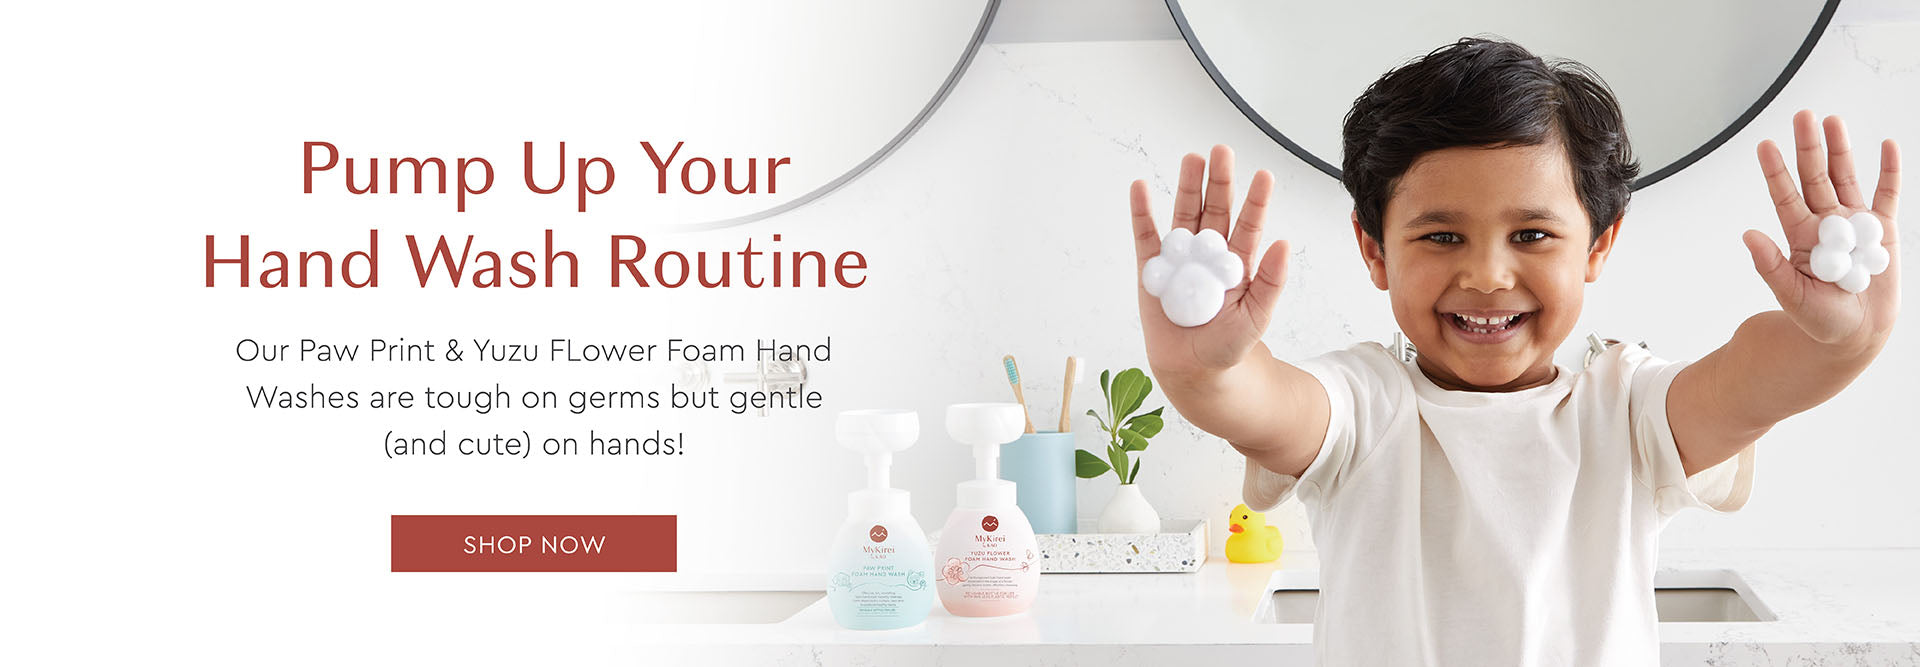 Pump Up Your Hand Wash Routine